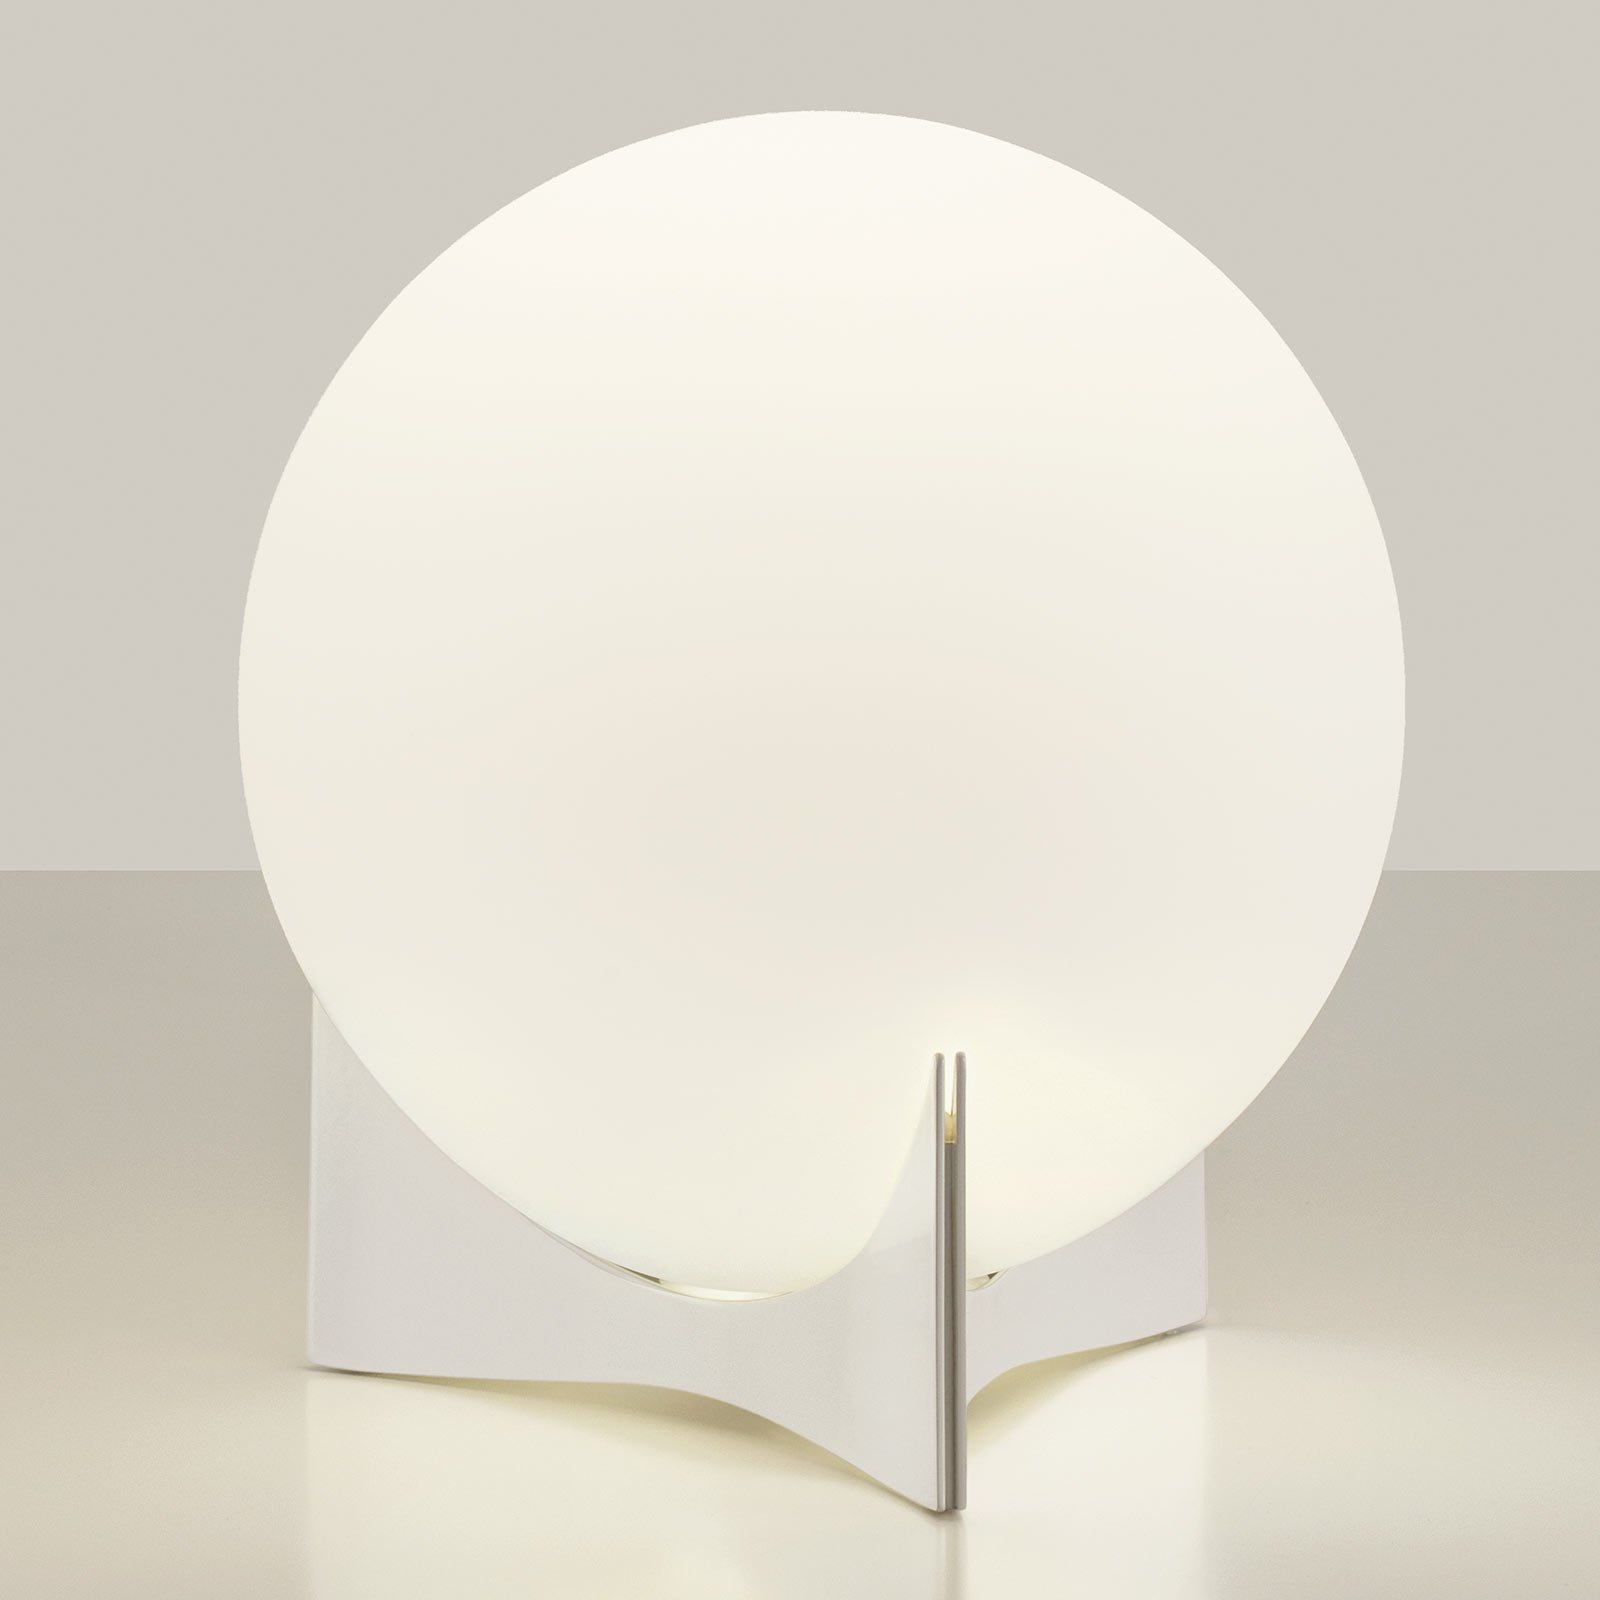 Terzani Oscar table lamp made of glass, white